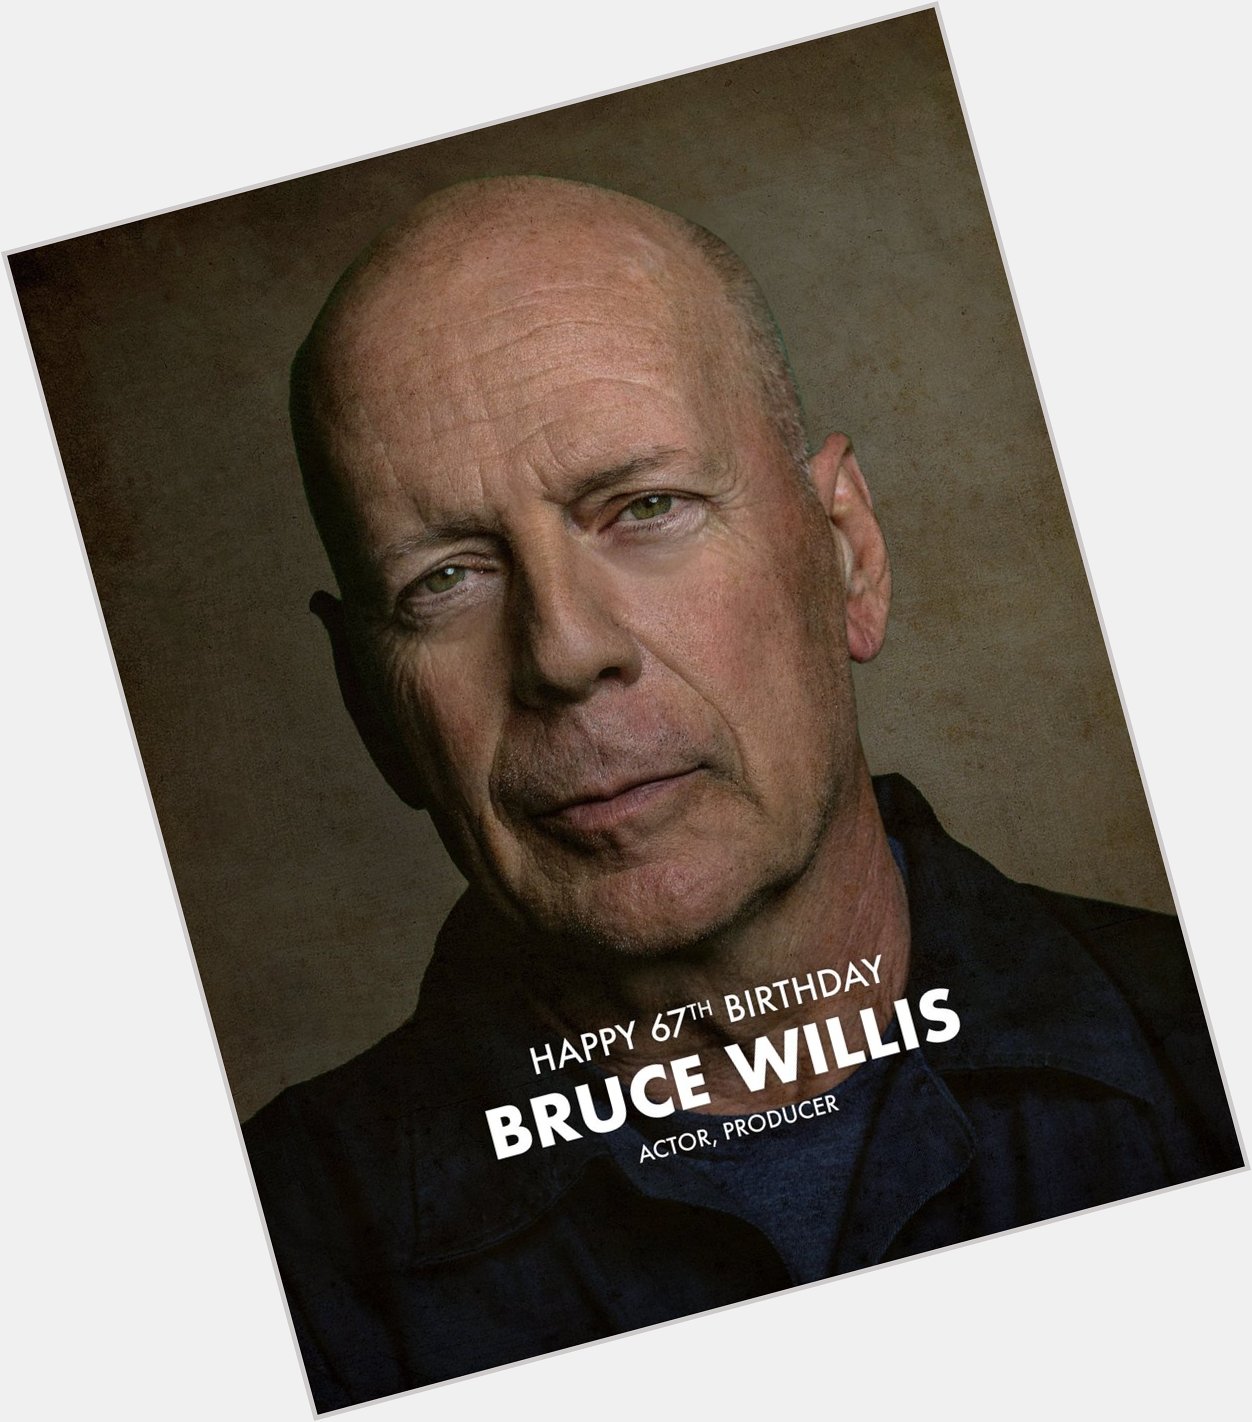 Happy 67th Birthday to Bruce Willis:   